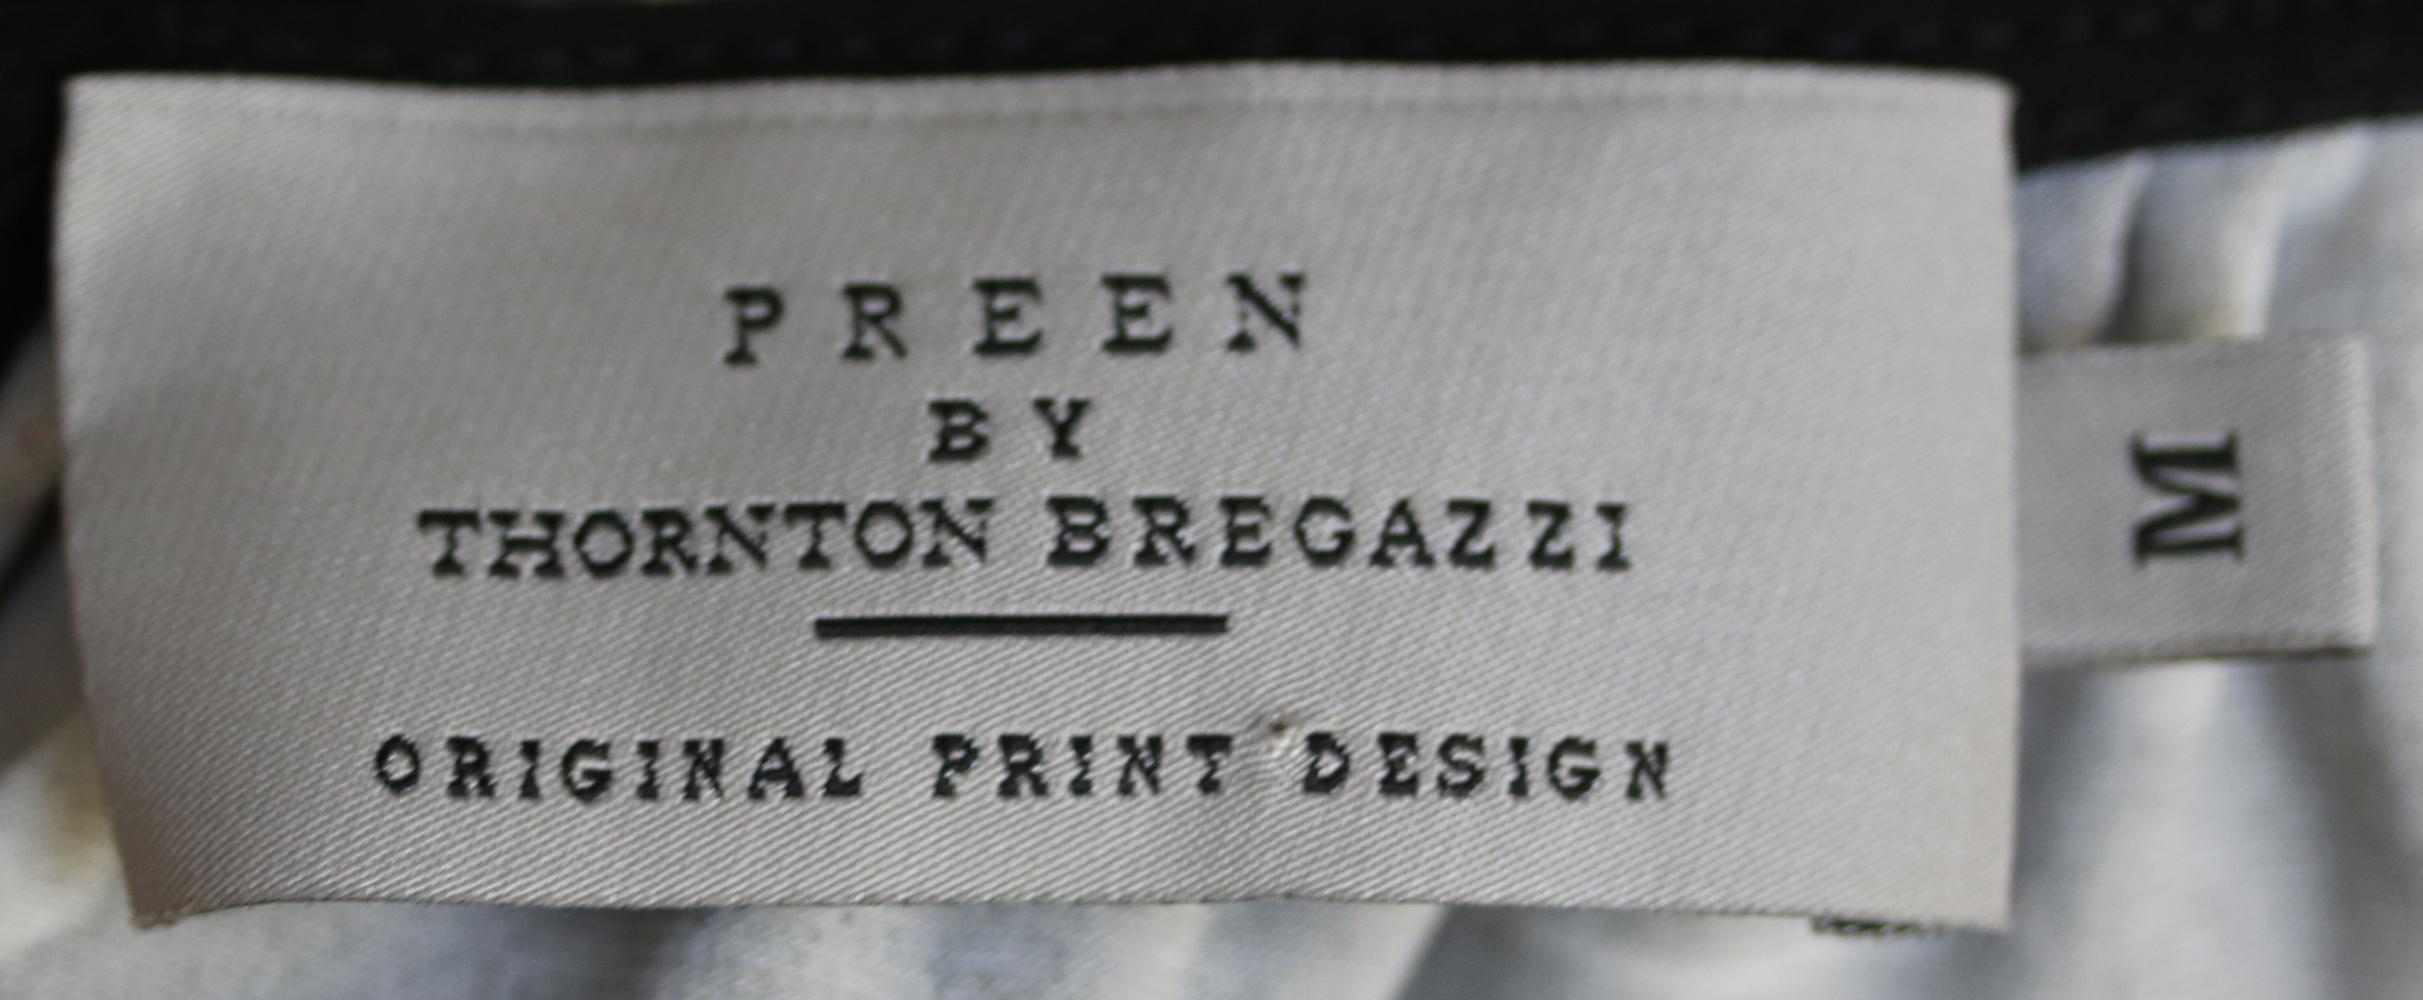 preen by thornton bregazzi black dress